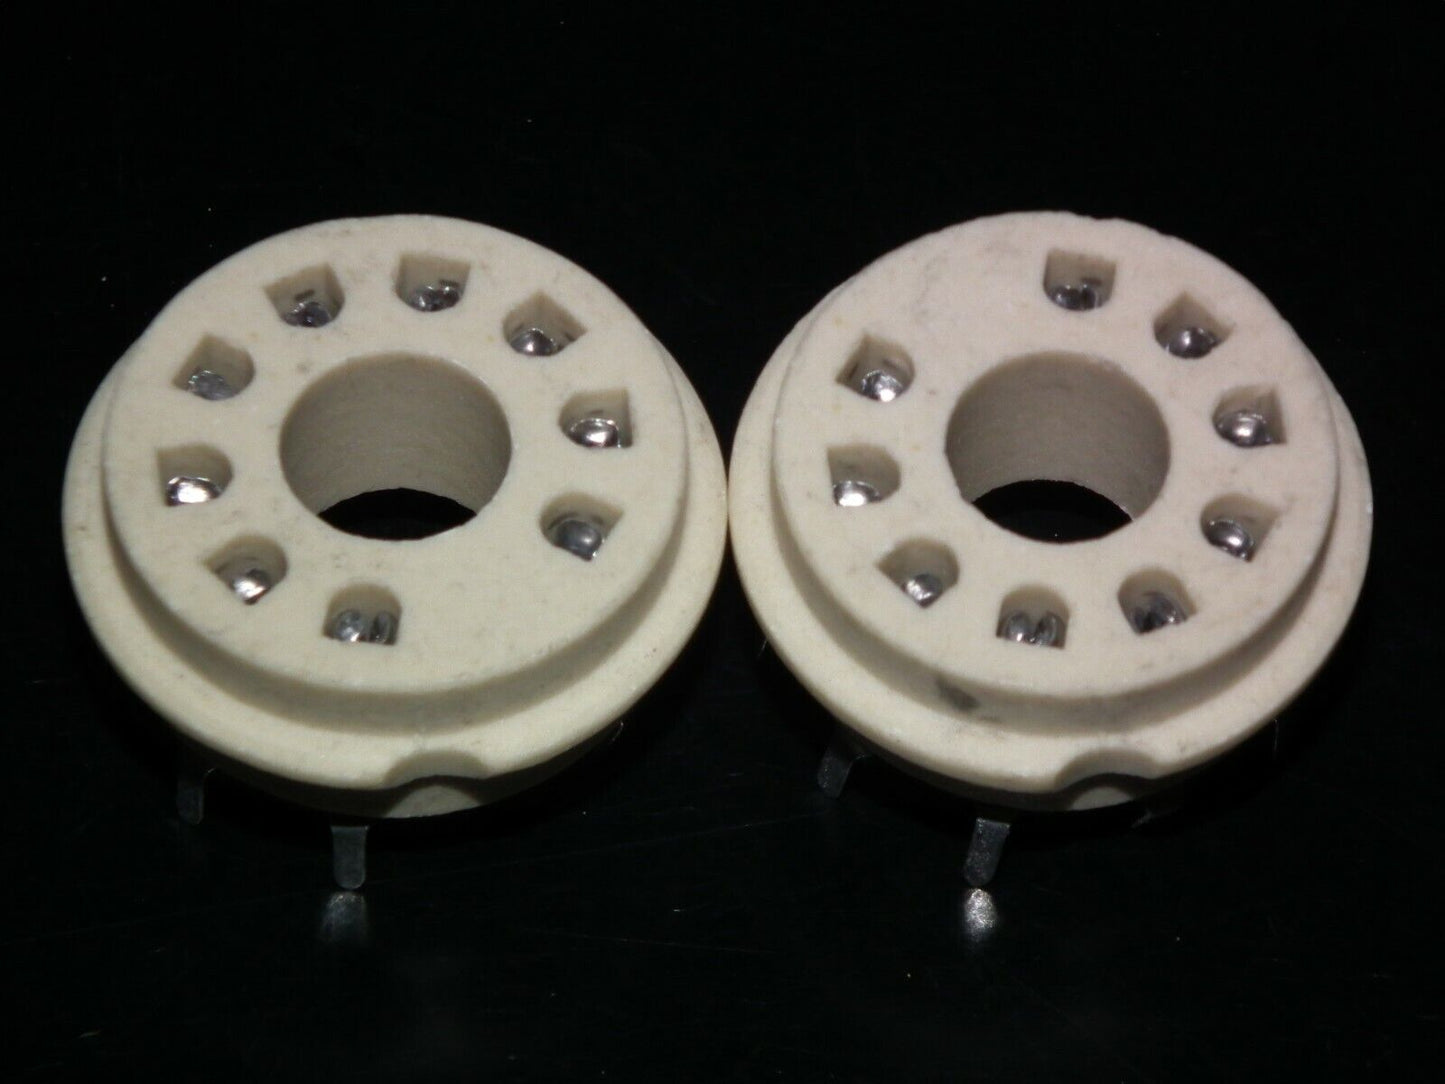 Two VINTAGE NOS Magnoval Vacuum Tube Ceramic Socket for PCB West Germany 60s